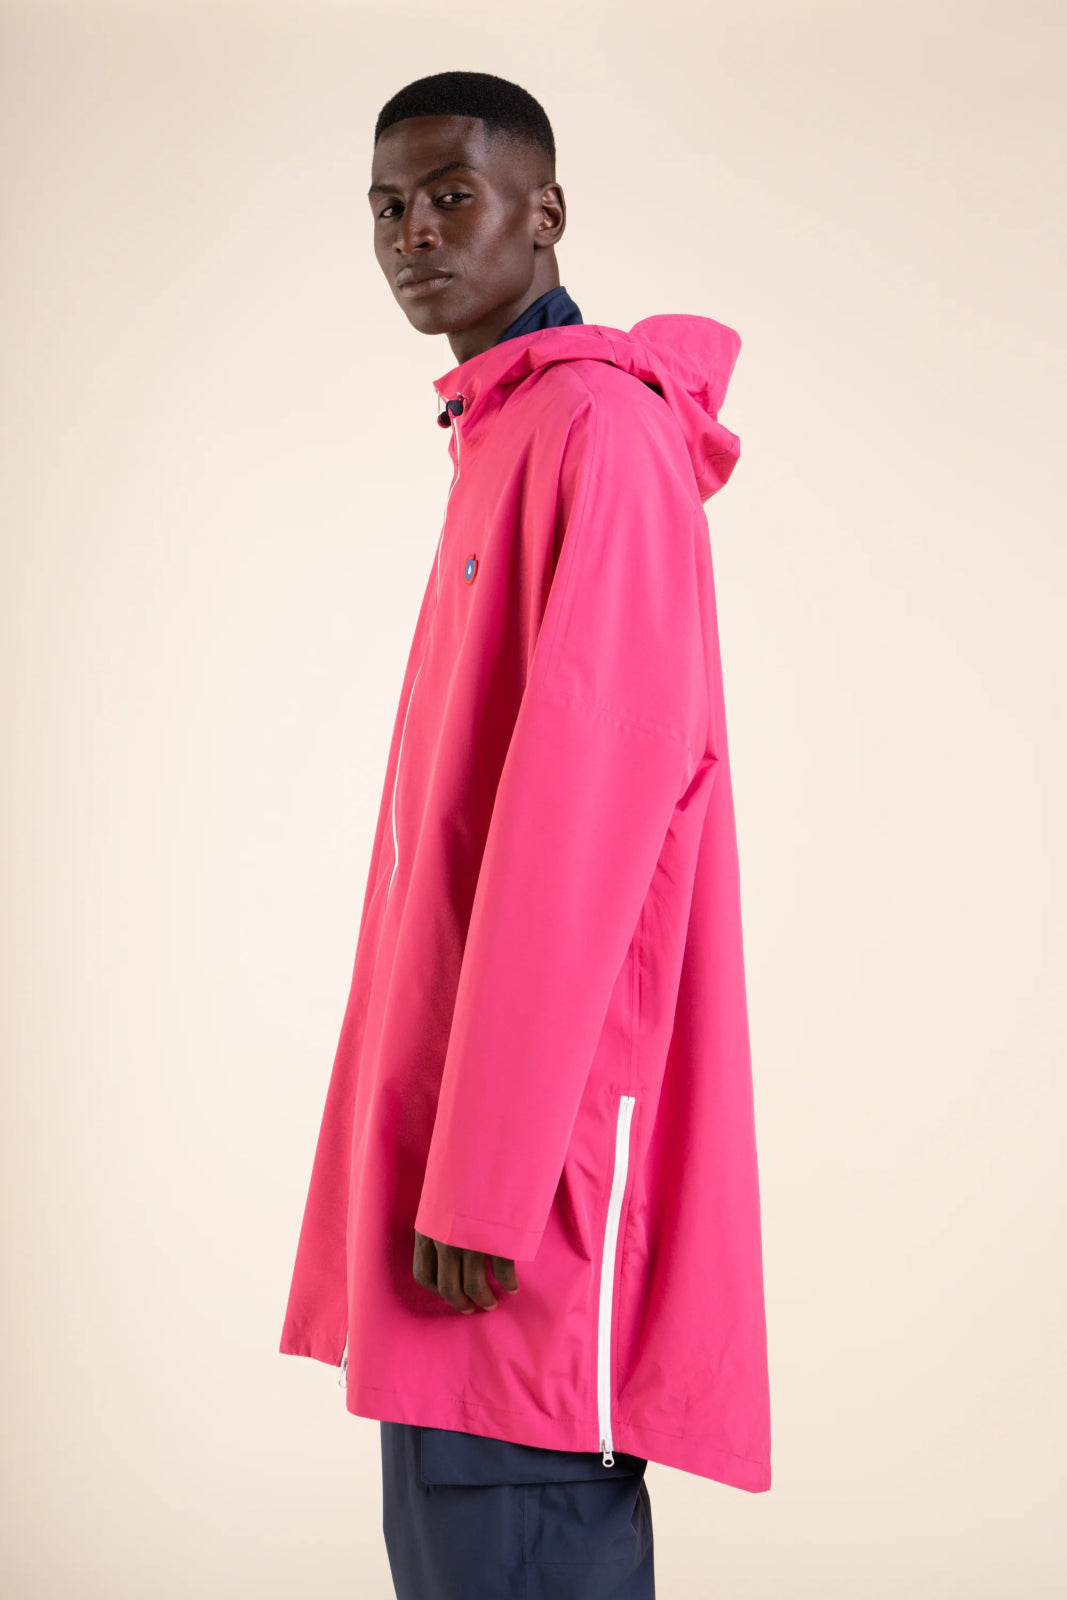 Liberté - Rain cape - Windbreaker jacket in a bag - Flotte #couleur_fuschia